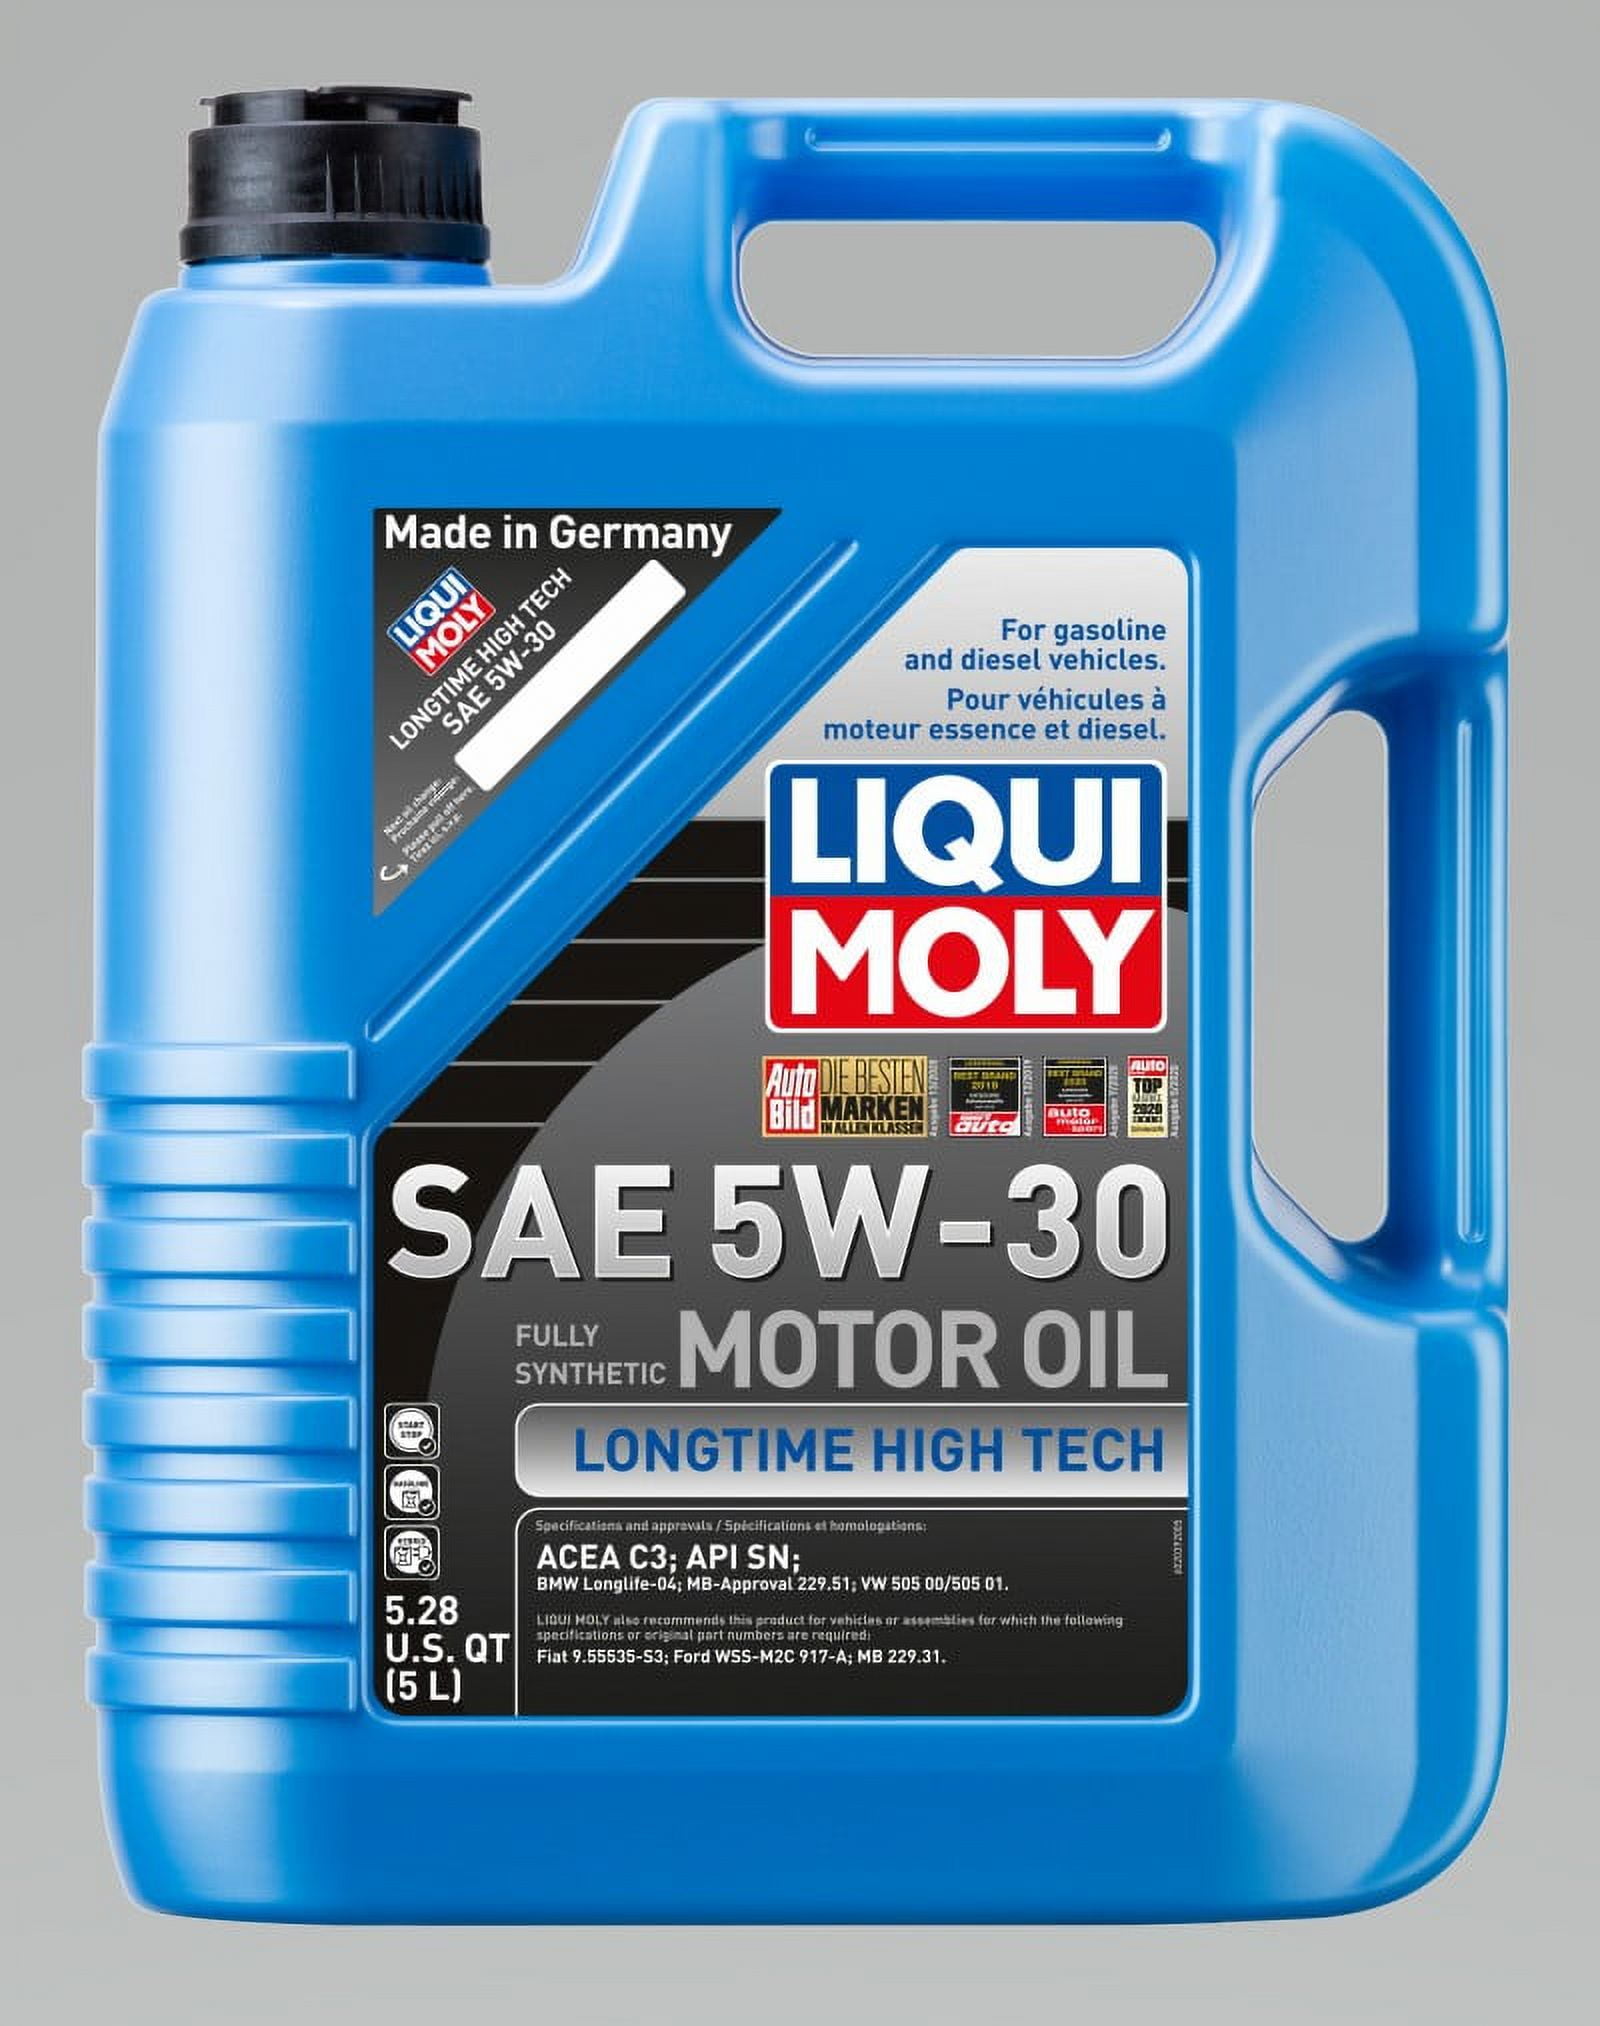 Liqui Moly Longlife III 5W30 Engine Oil (5 Liter) LM20222 by Liqui